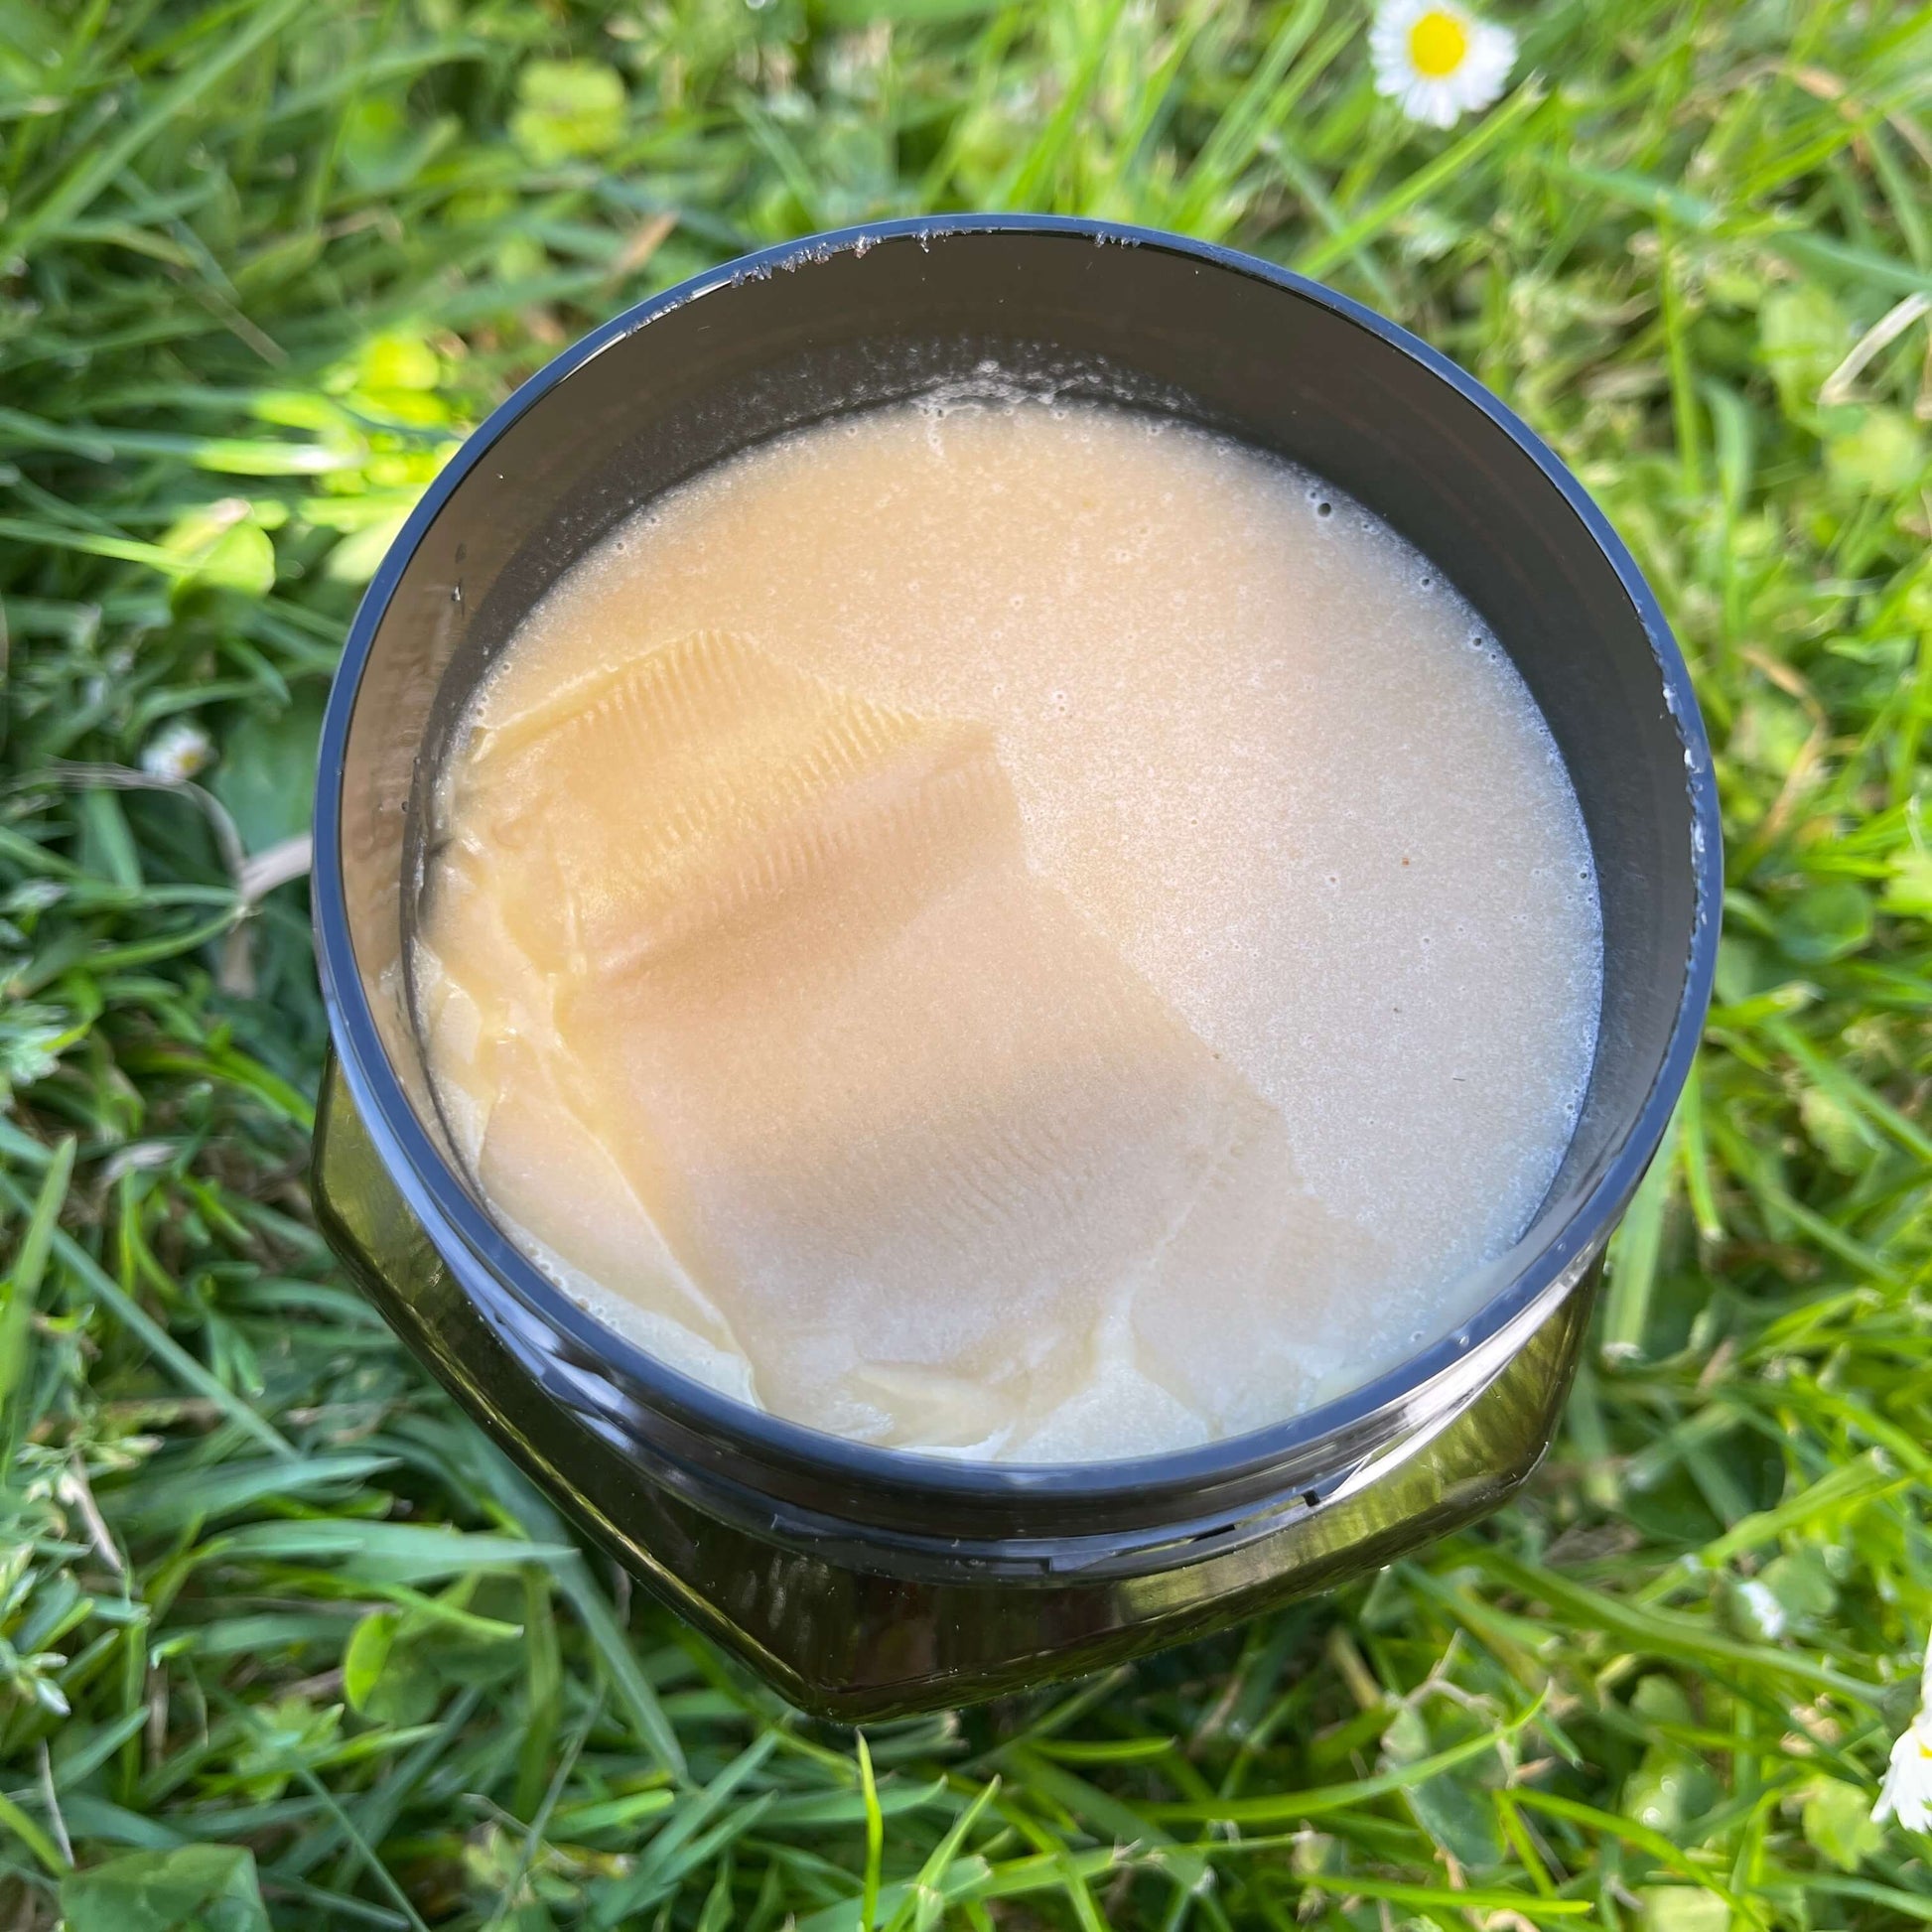 Raw Rewarewa Honey in jar.